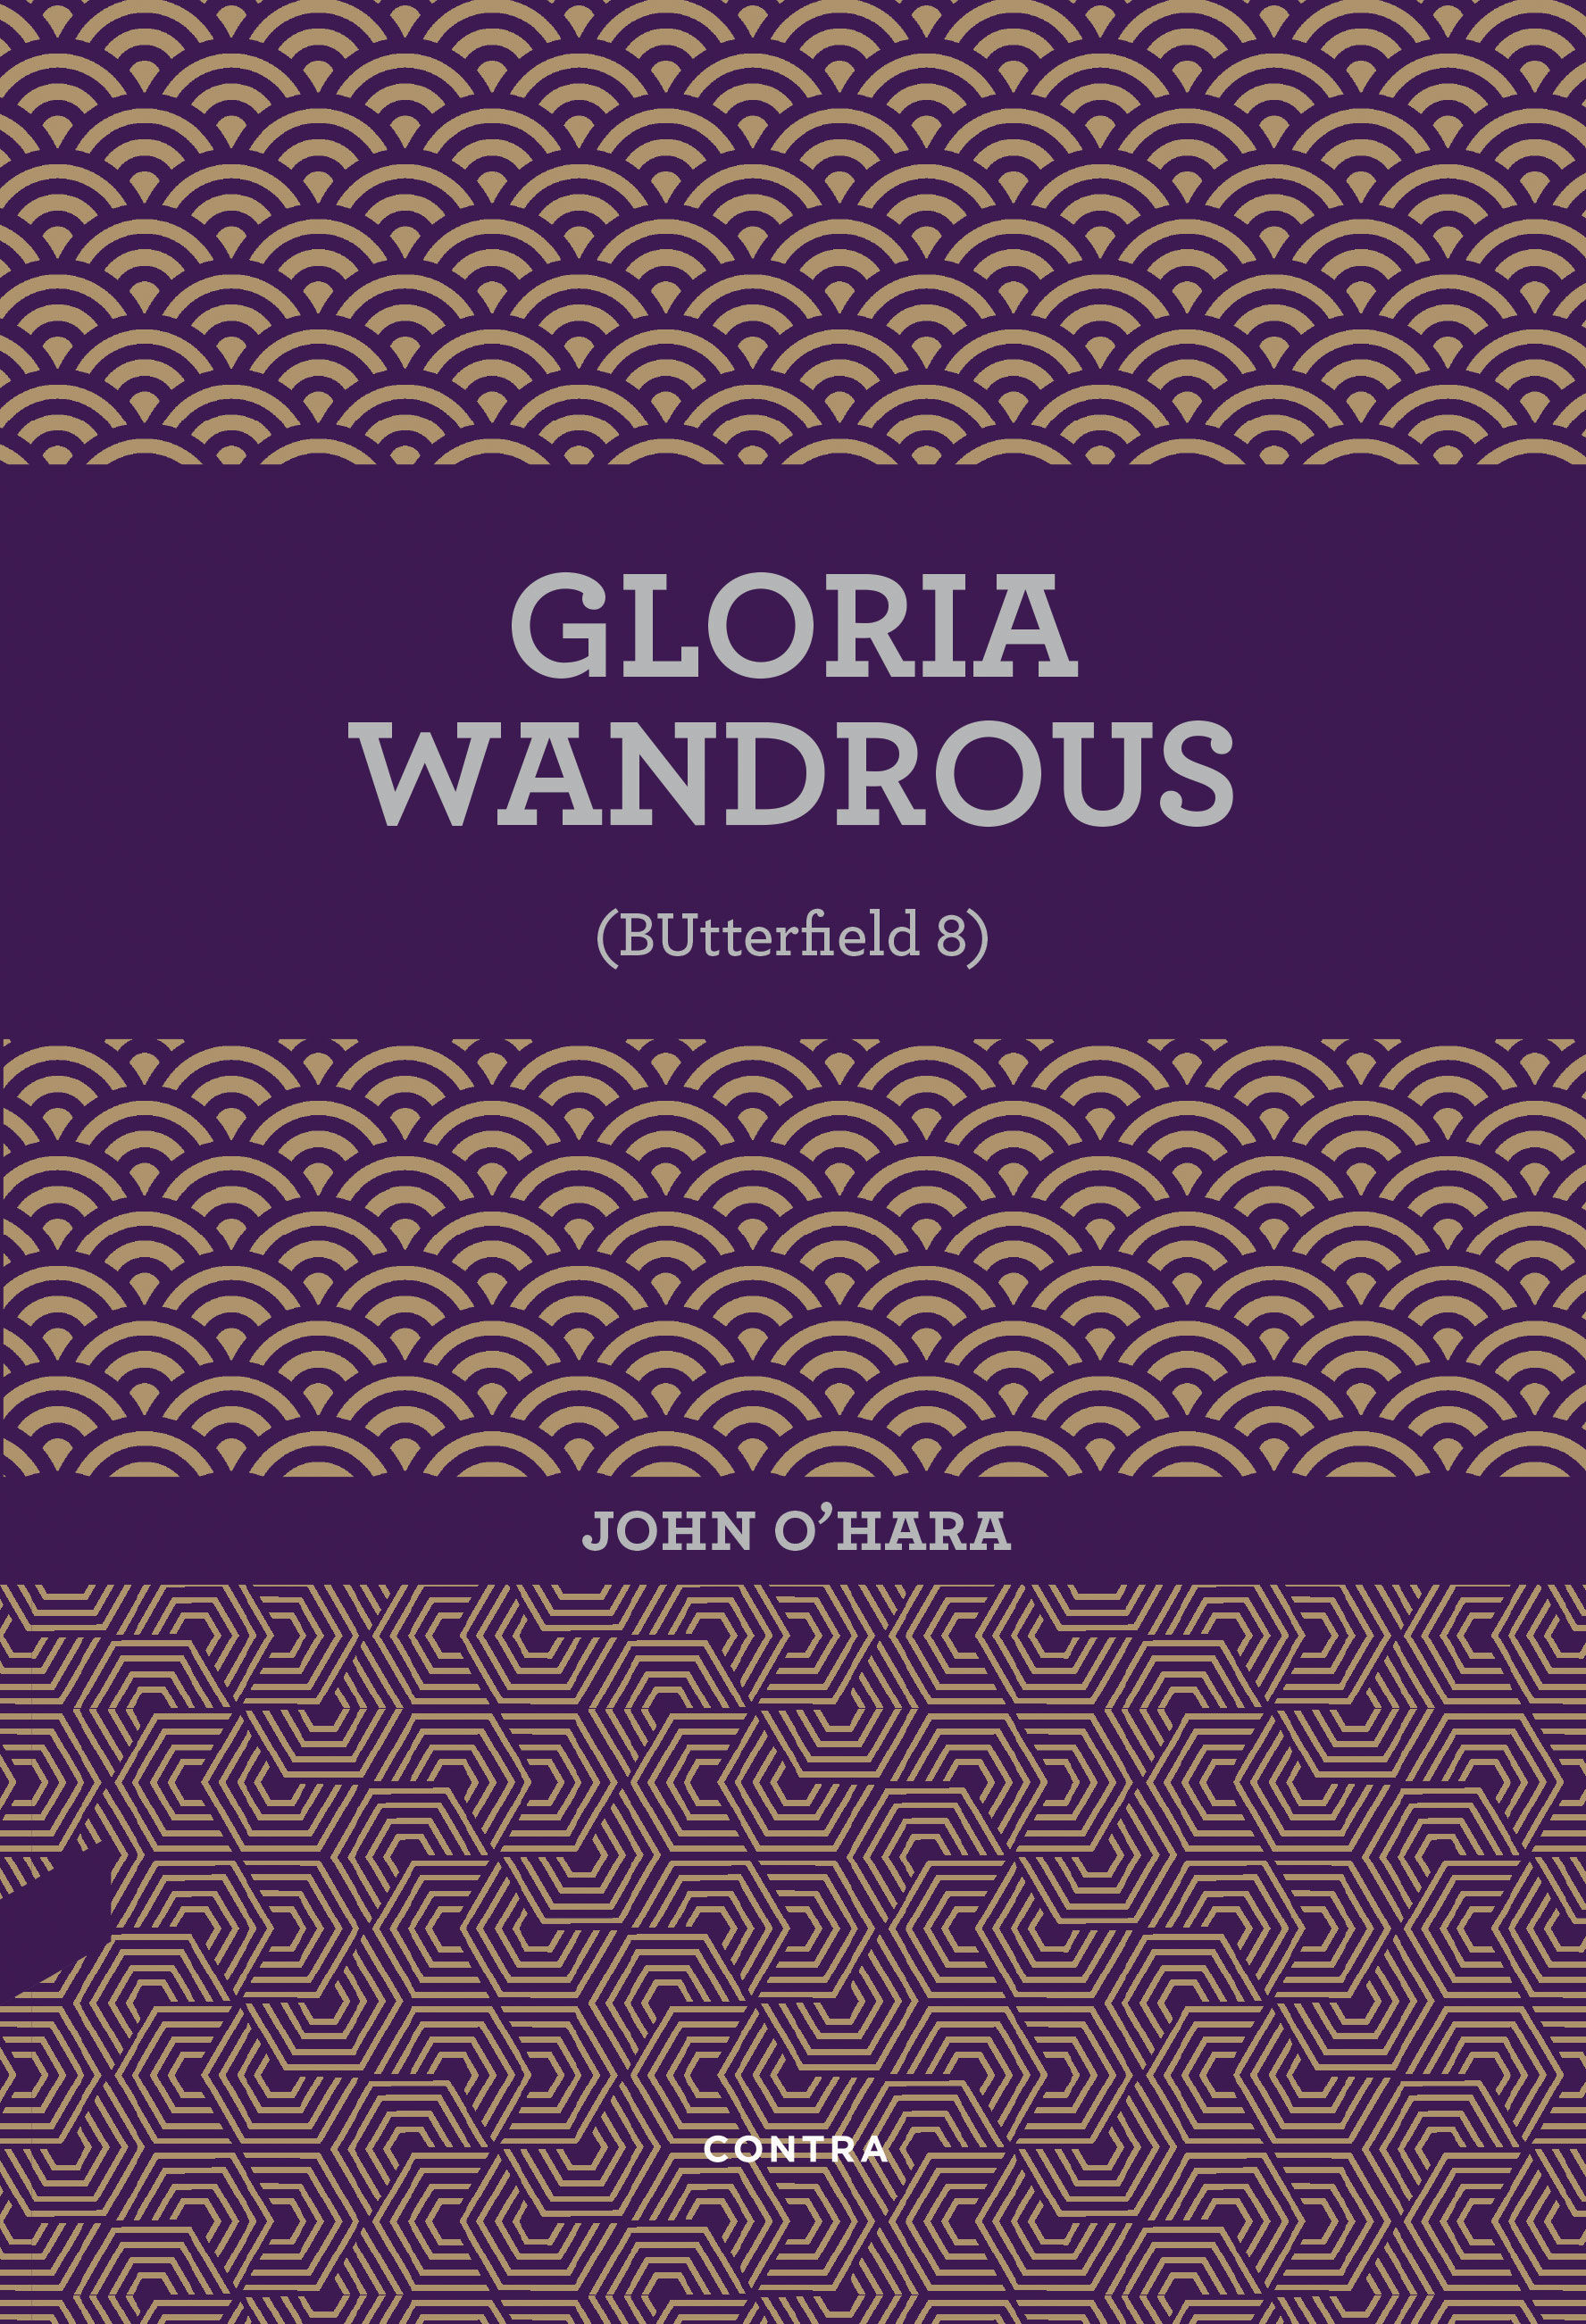 GLORIA WANDROUS. BUTTERFIELD 8